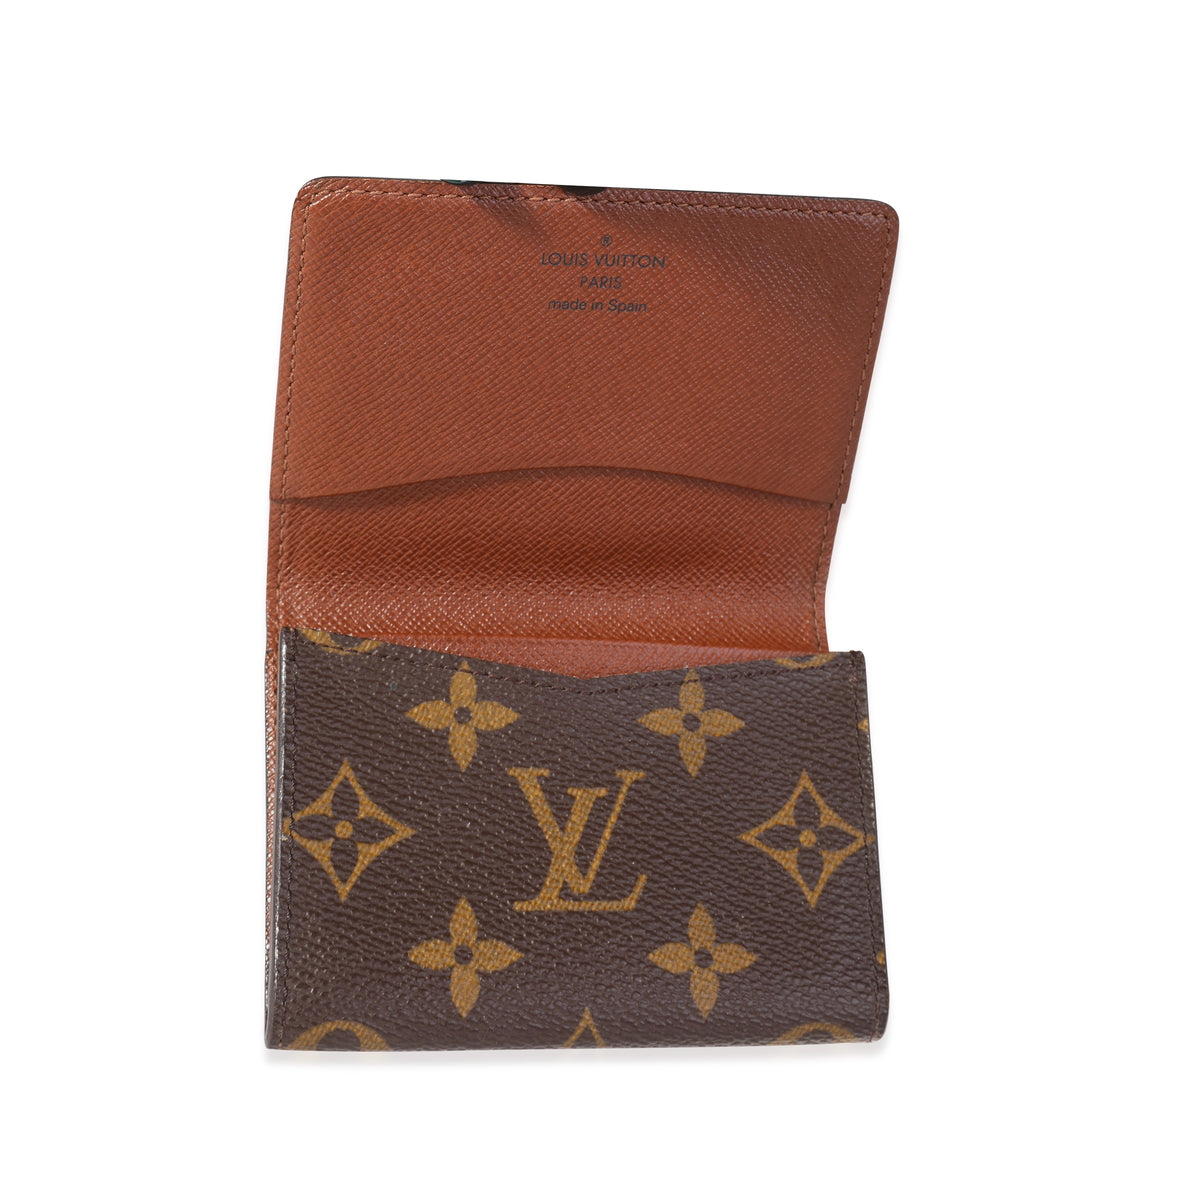 Louis Vuitton Monogram Business Card Holder on SALE